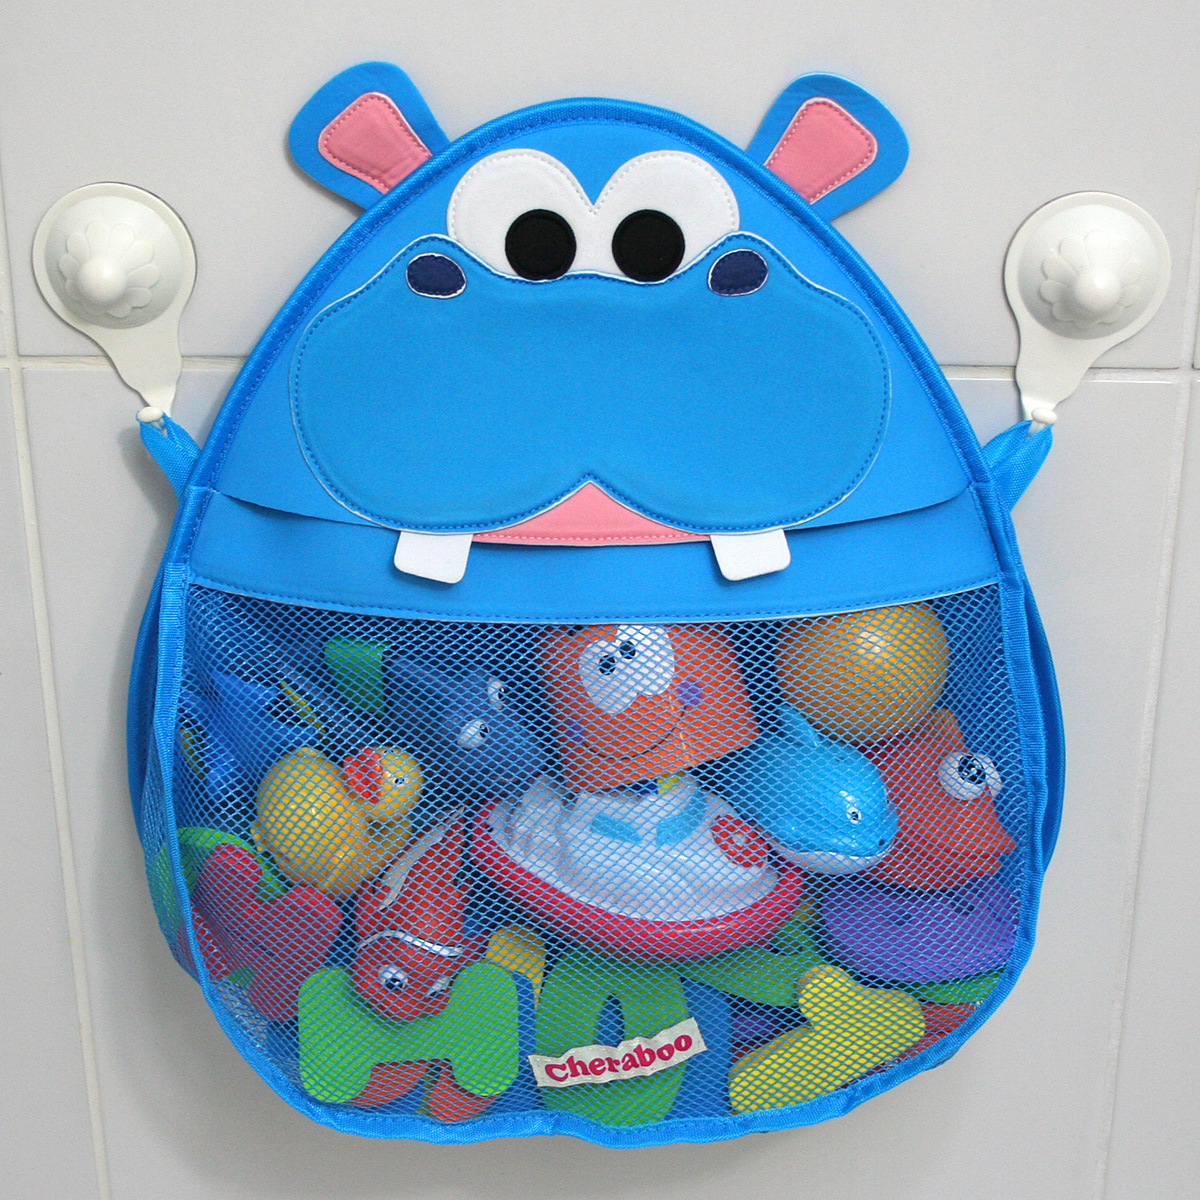 The Hurley Hippo Bath Toy Organizer Makes B